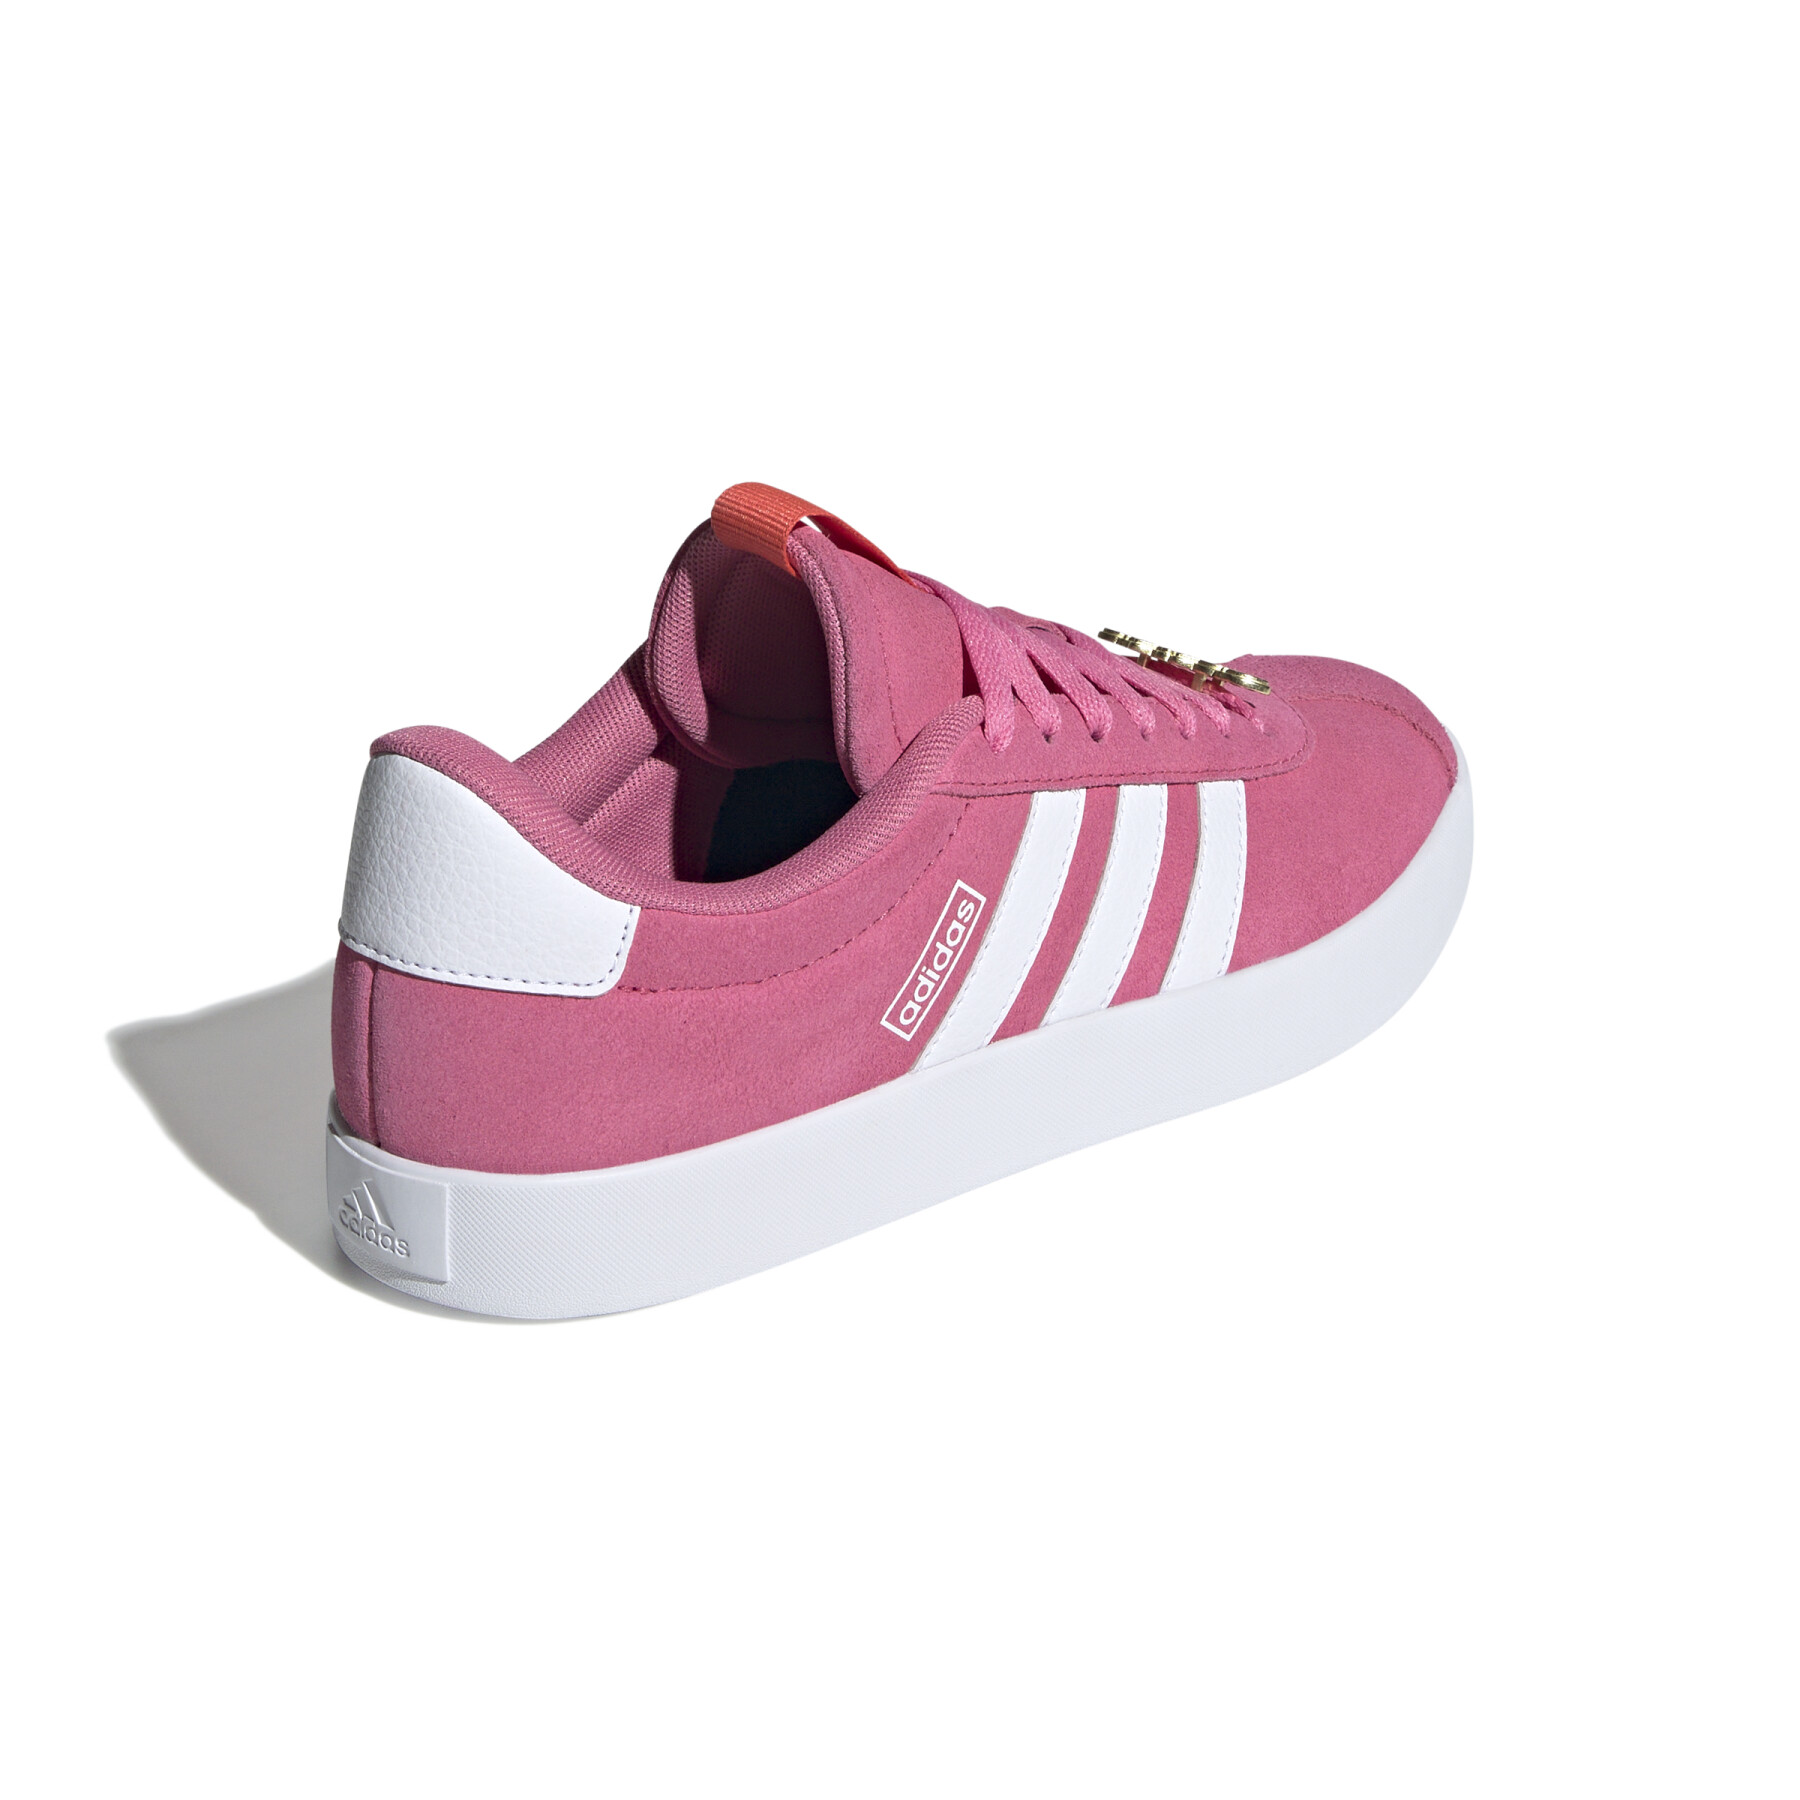 Women's sneakers adidas VL Court 3.0